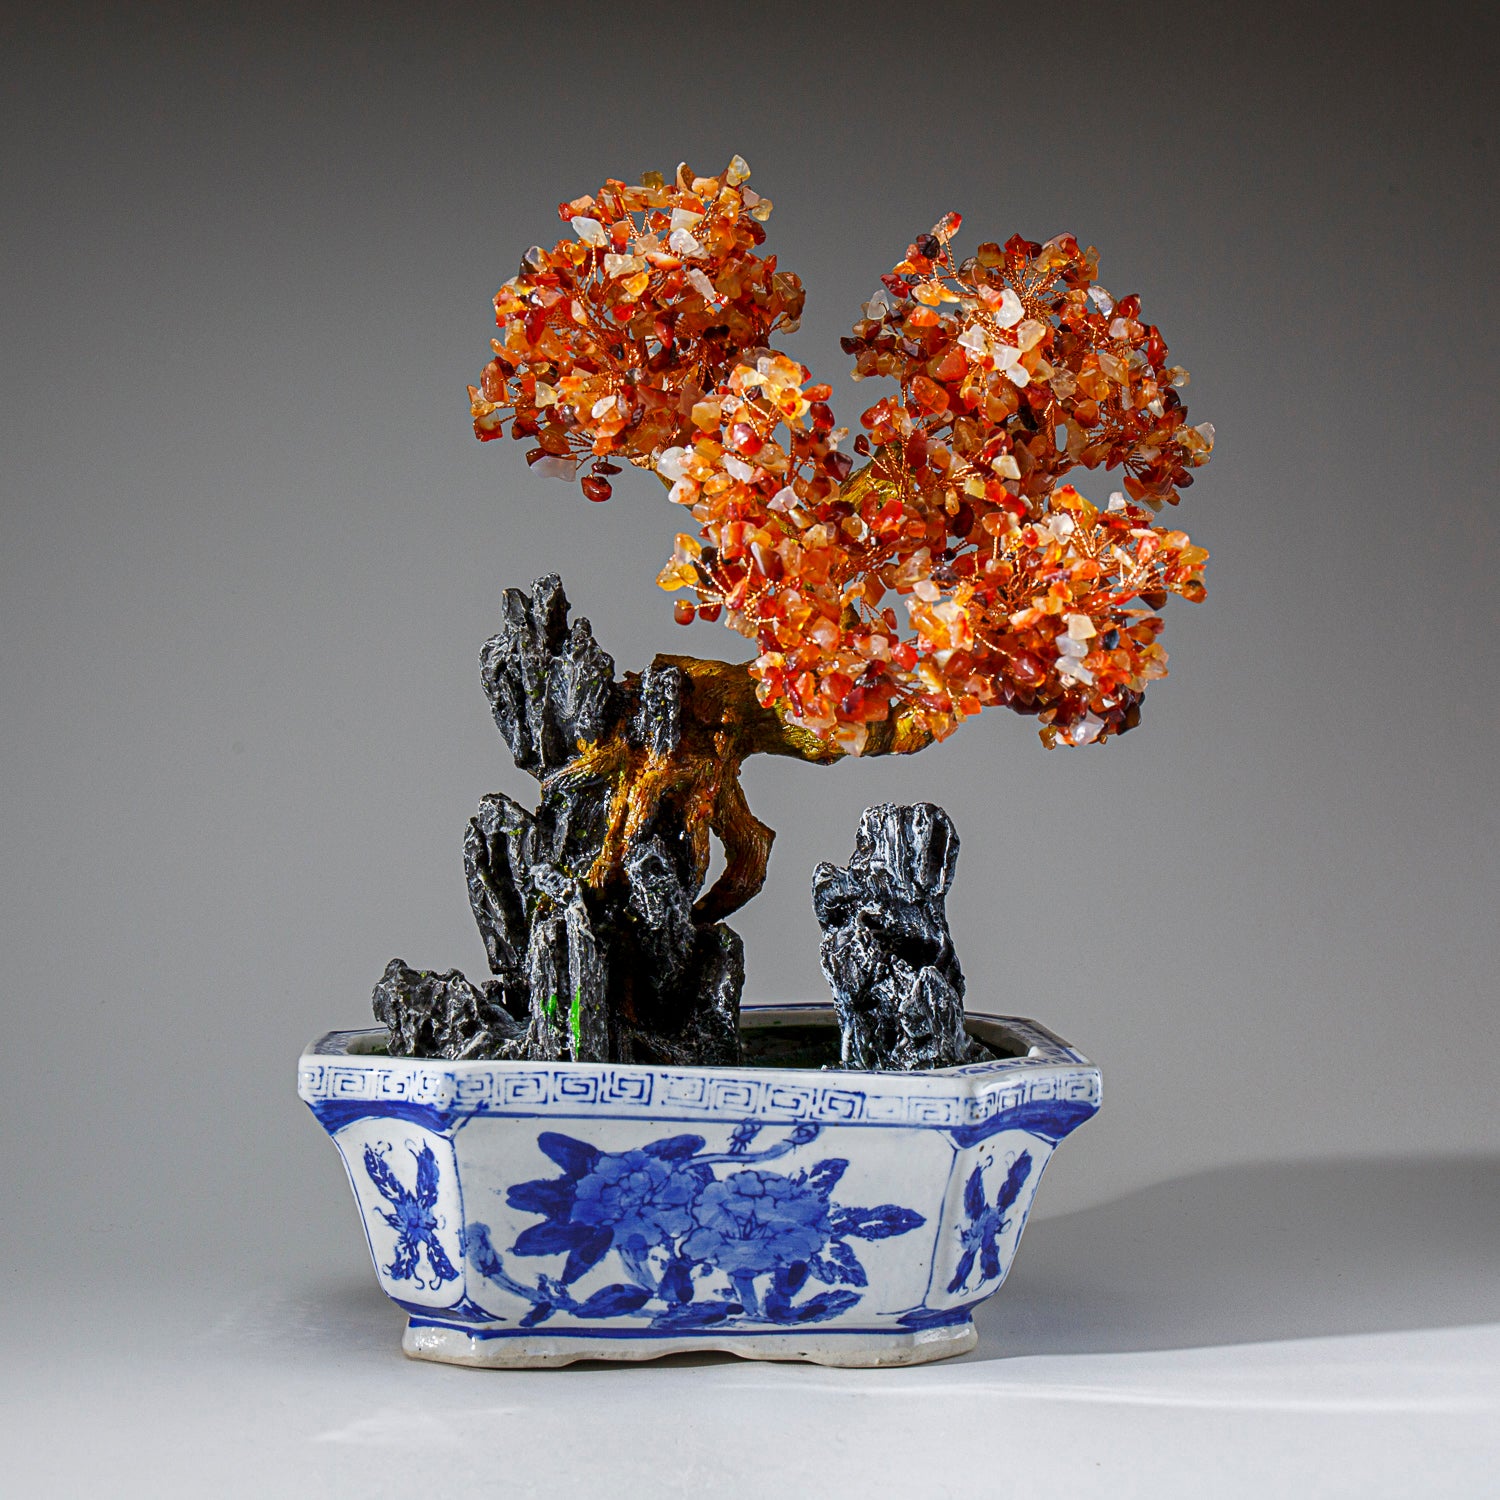 Genuine Carnelian Gemstone Bonsai Tree in Square Ceramic Pot (13” Tall)